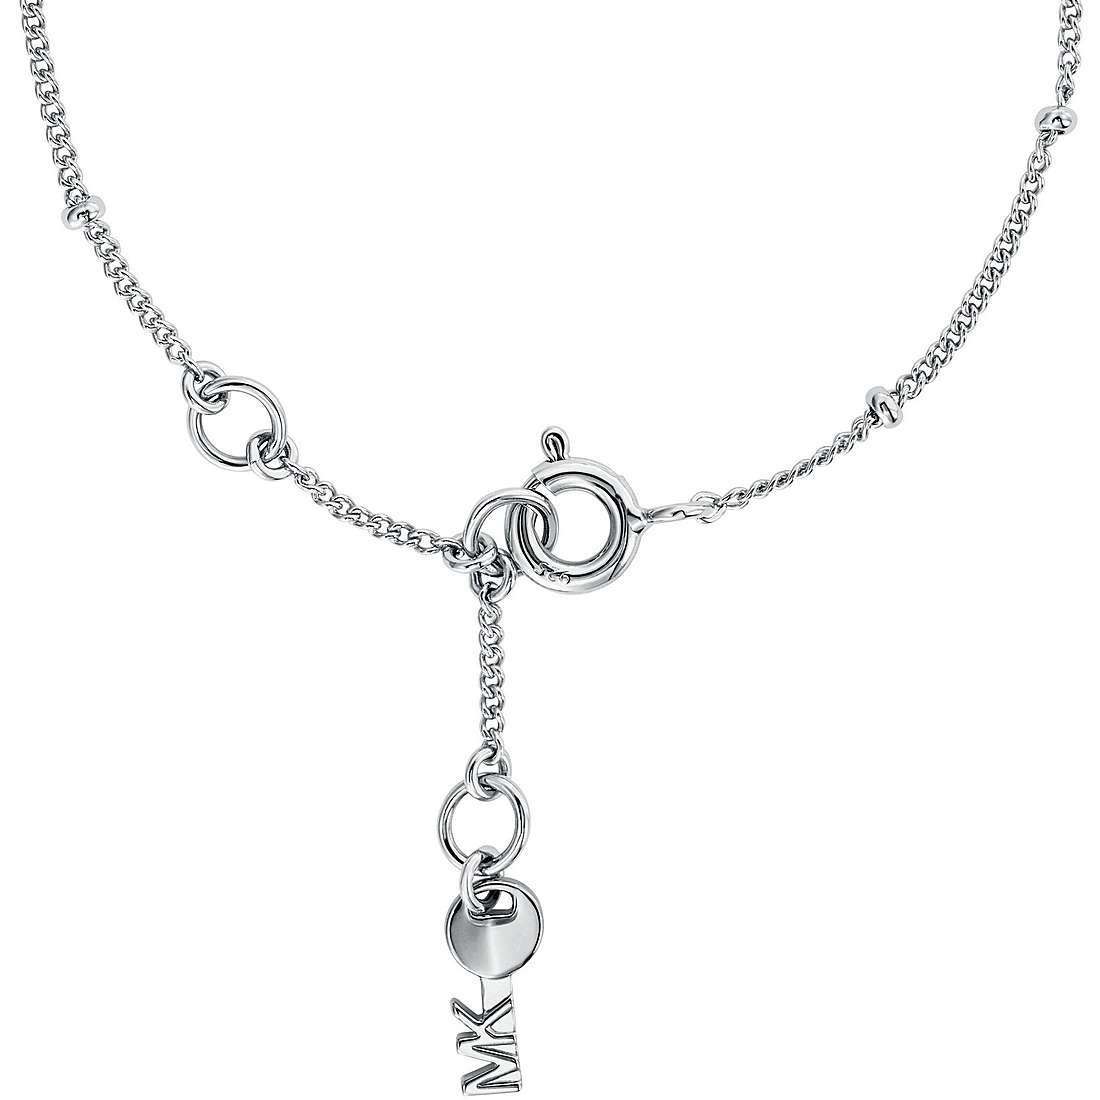 bracelet woman jewellery Michael Kors Kors Love MKC1118AN040